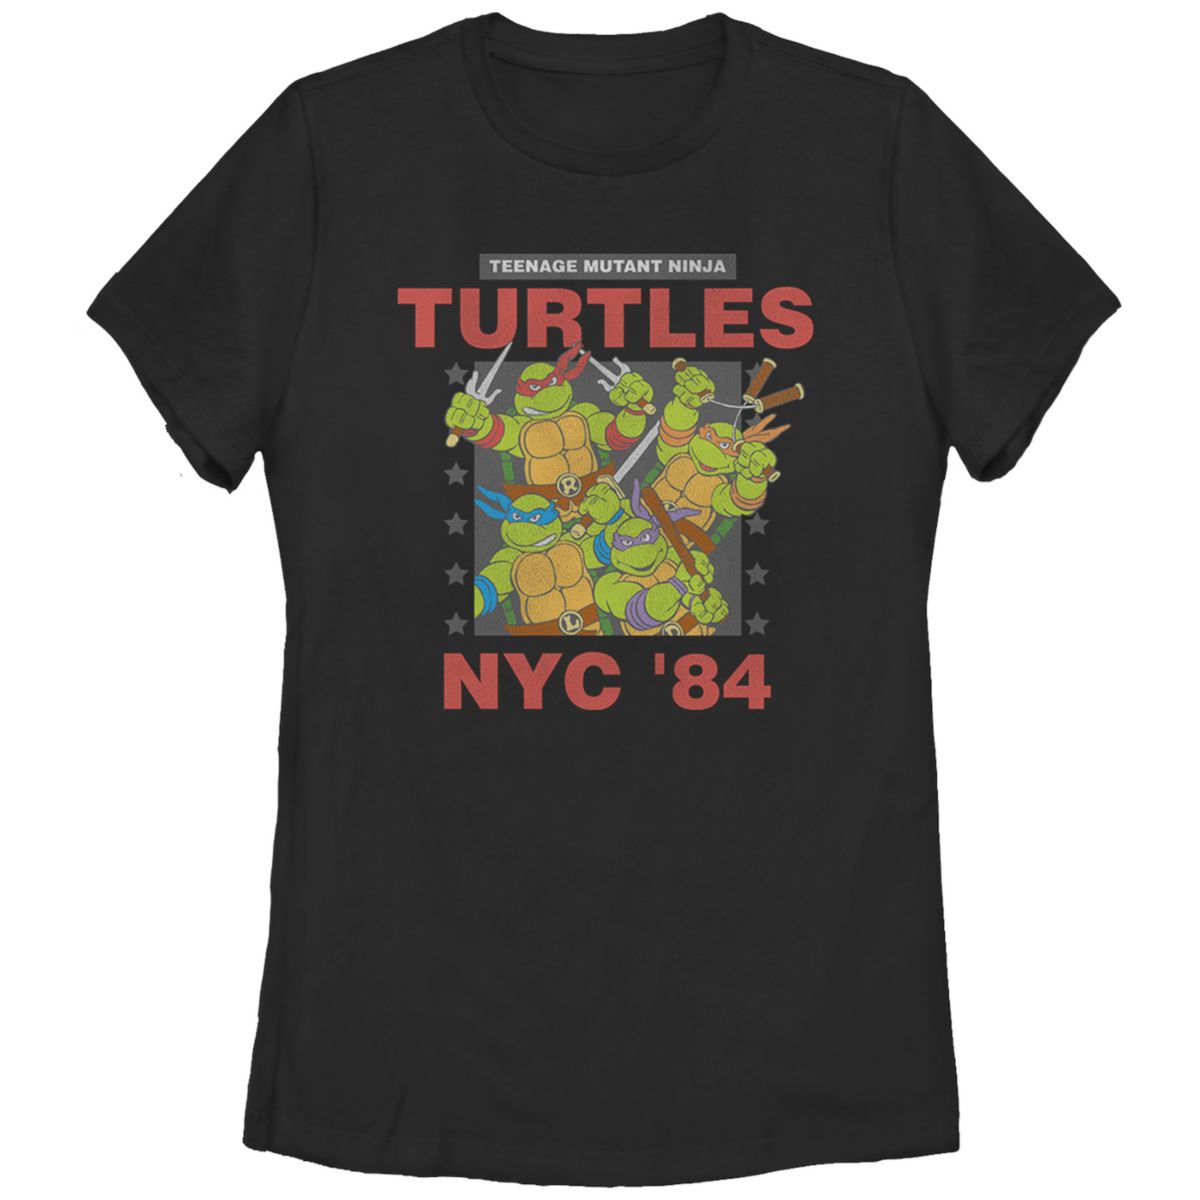 Juniors' Nickelodeon Teenage Mutant Ninja Turtles Turtle Rock '84 Graphic Tee Nickelodeon